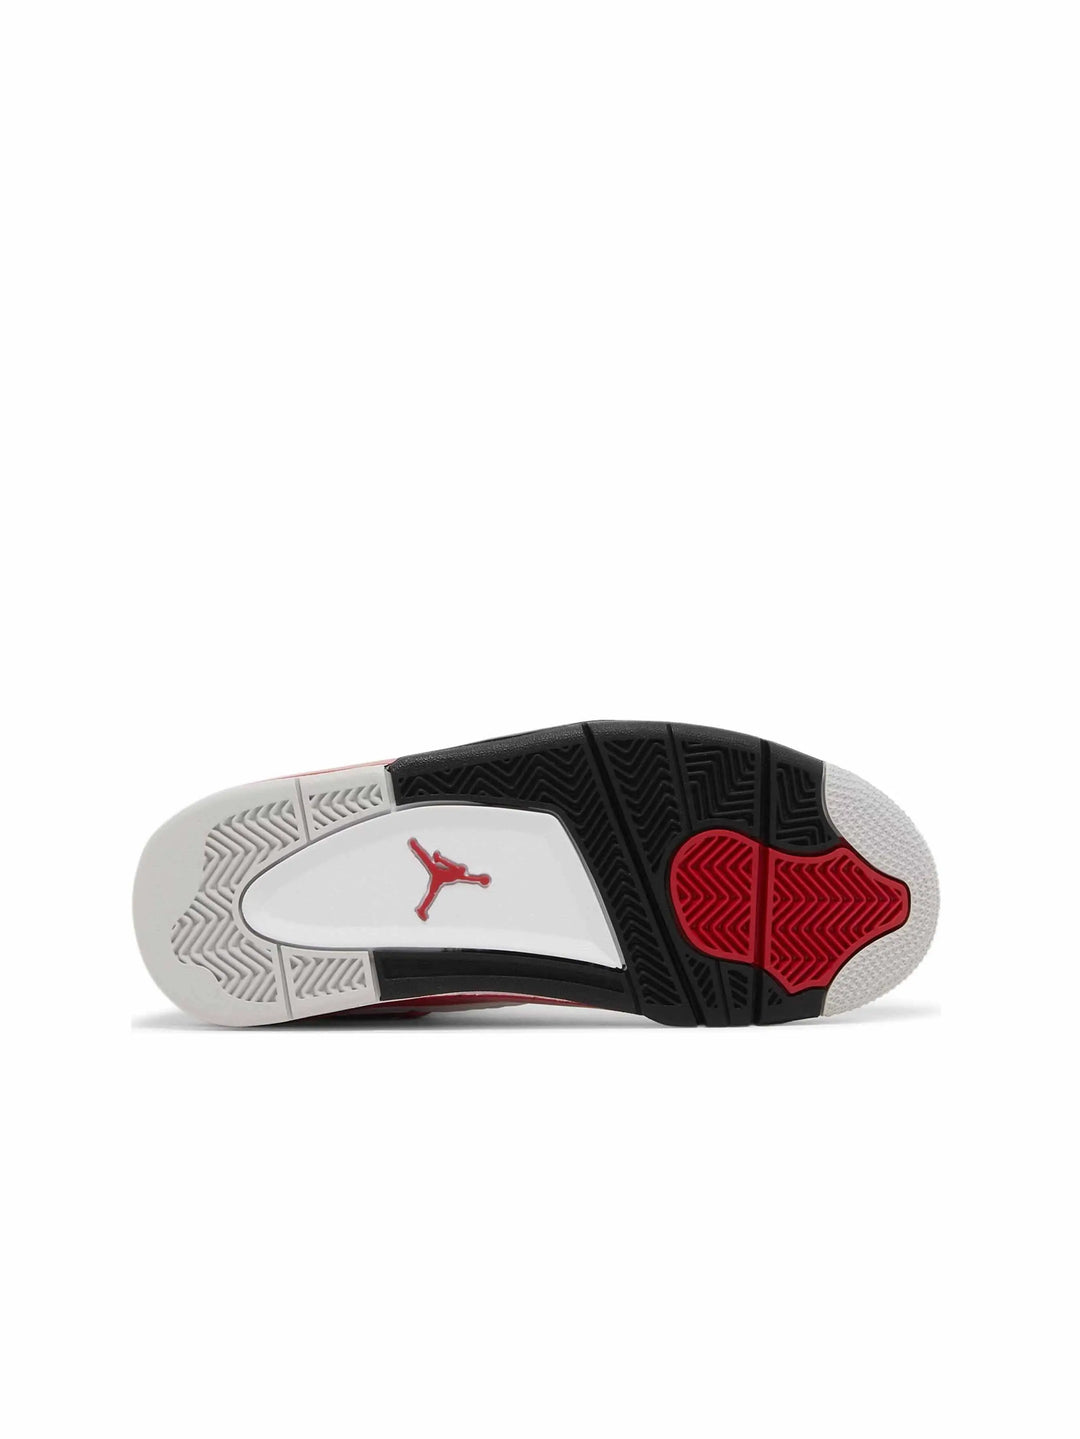 Nike Air Jordan 4 Retro Red Cement (GS) - Prior